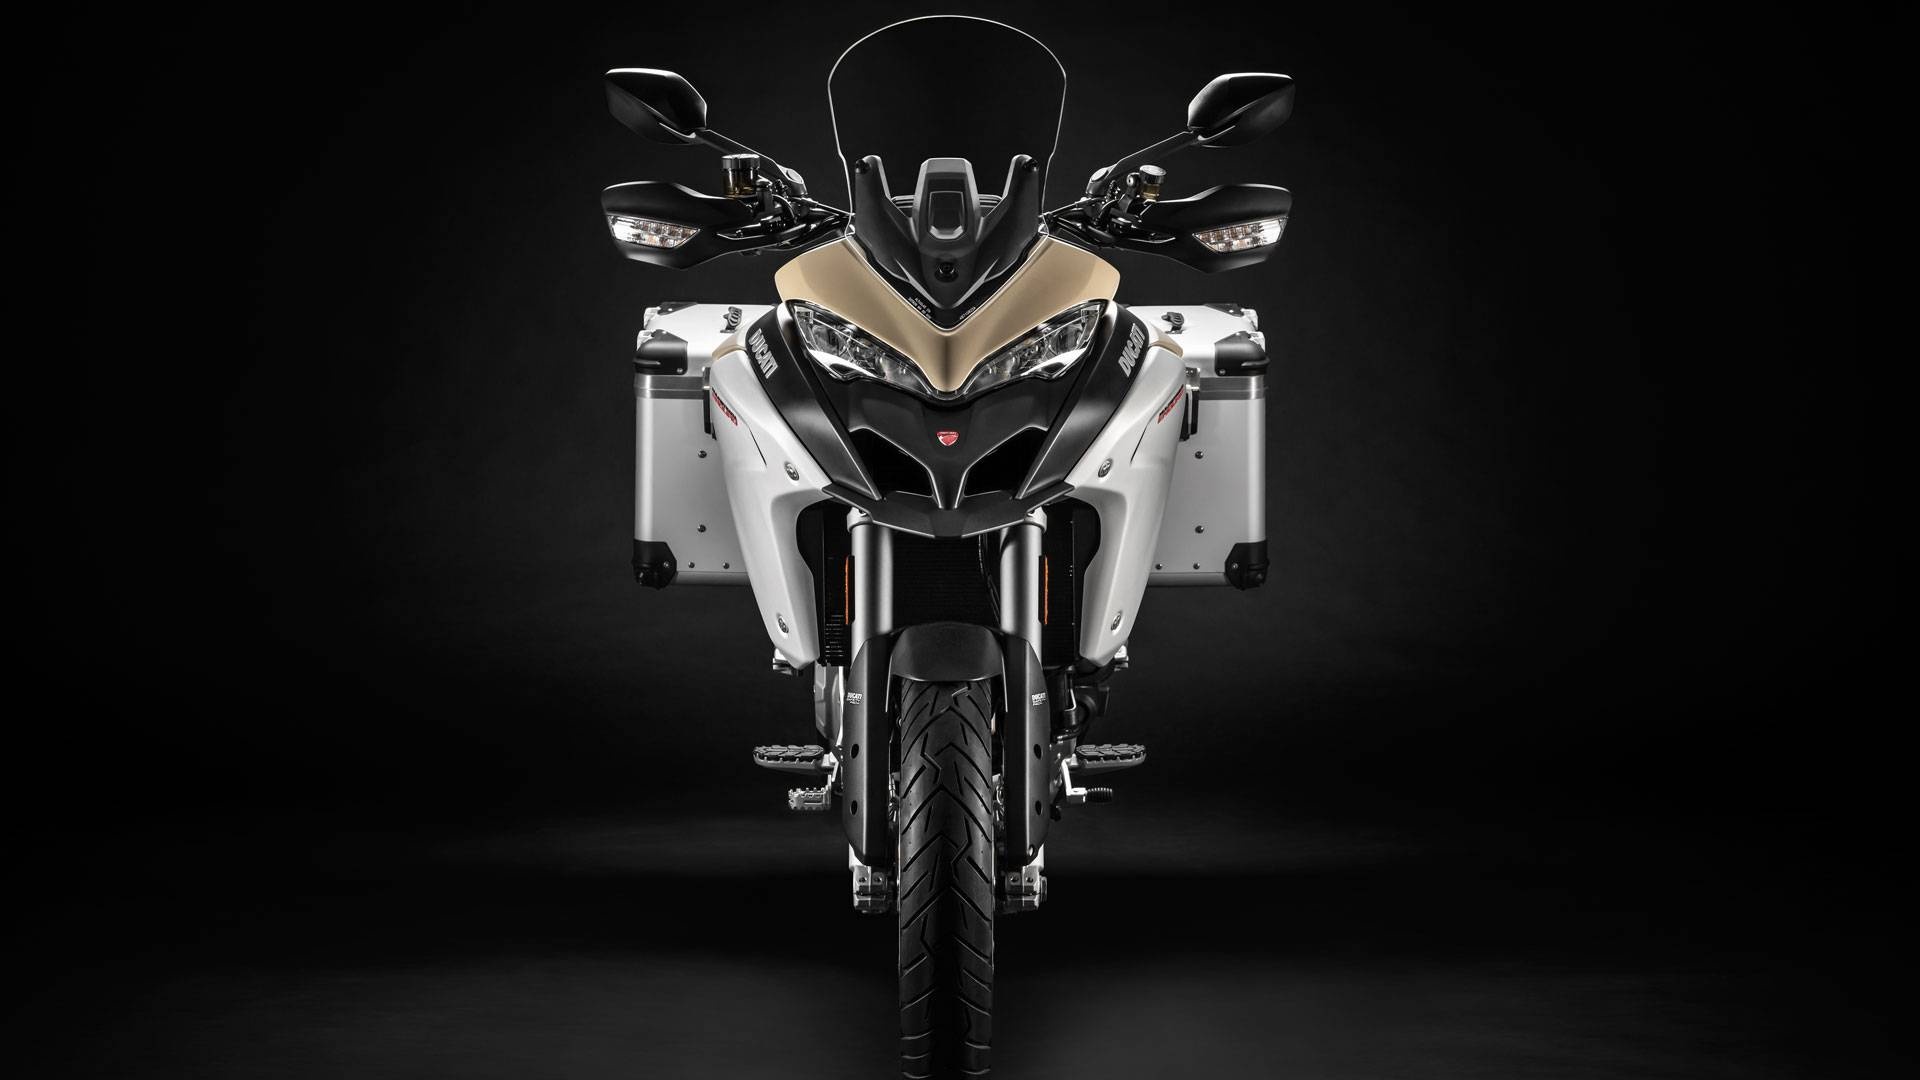 Ducati Multistrada 1260 Enduro, Powerful adventure bike, Official announcement, Exciting news, 1920x1080 Full HD Desktop